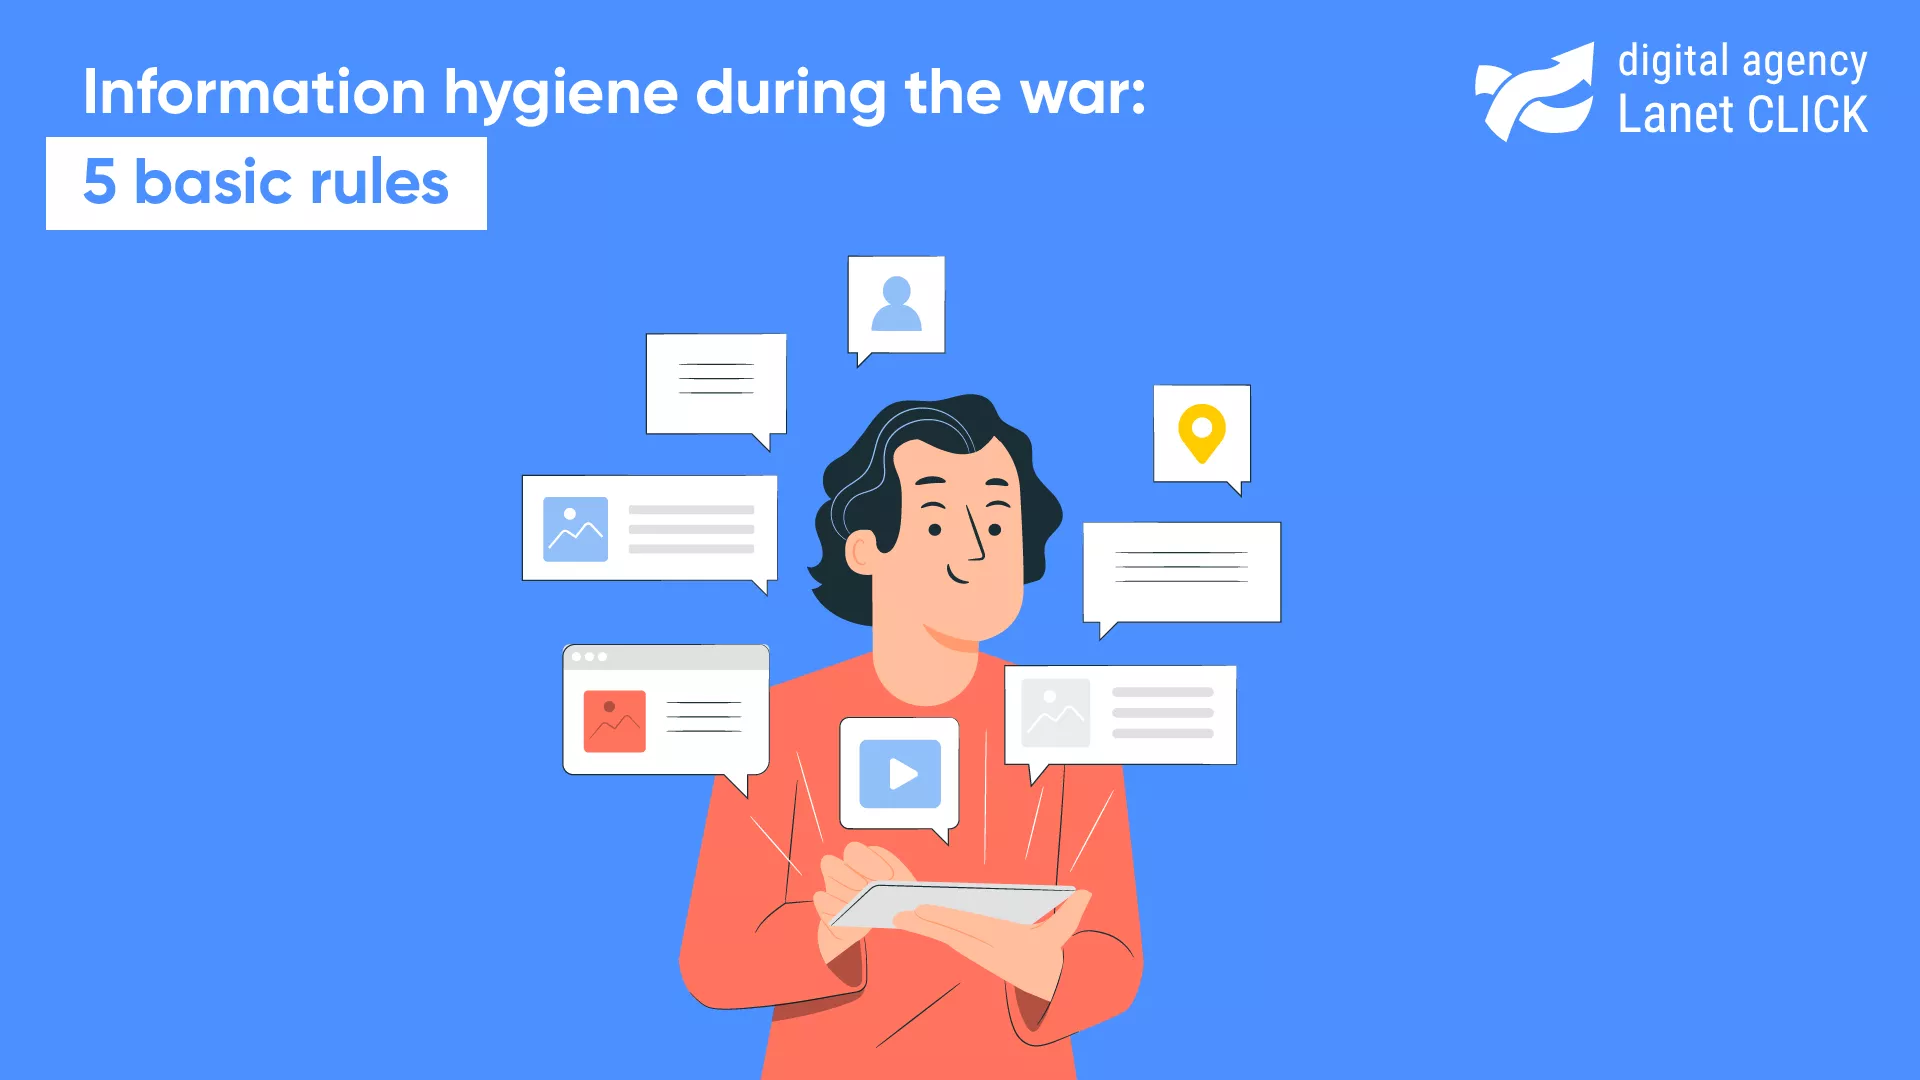 Informational hygiene during war: 5 main rules